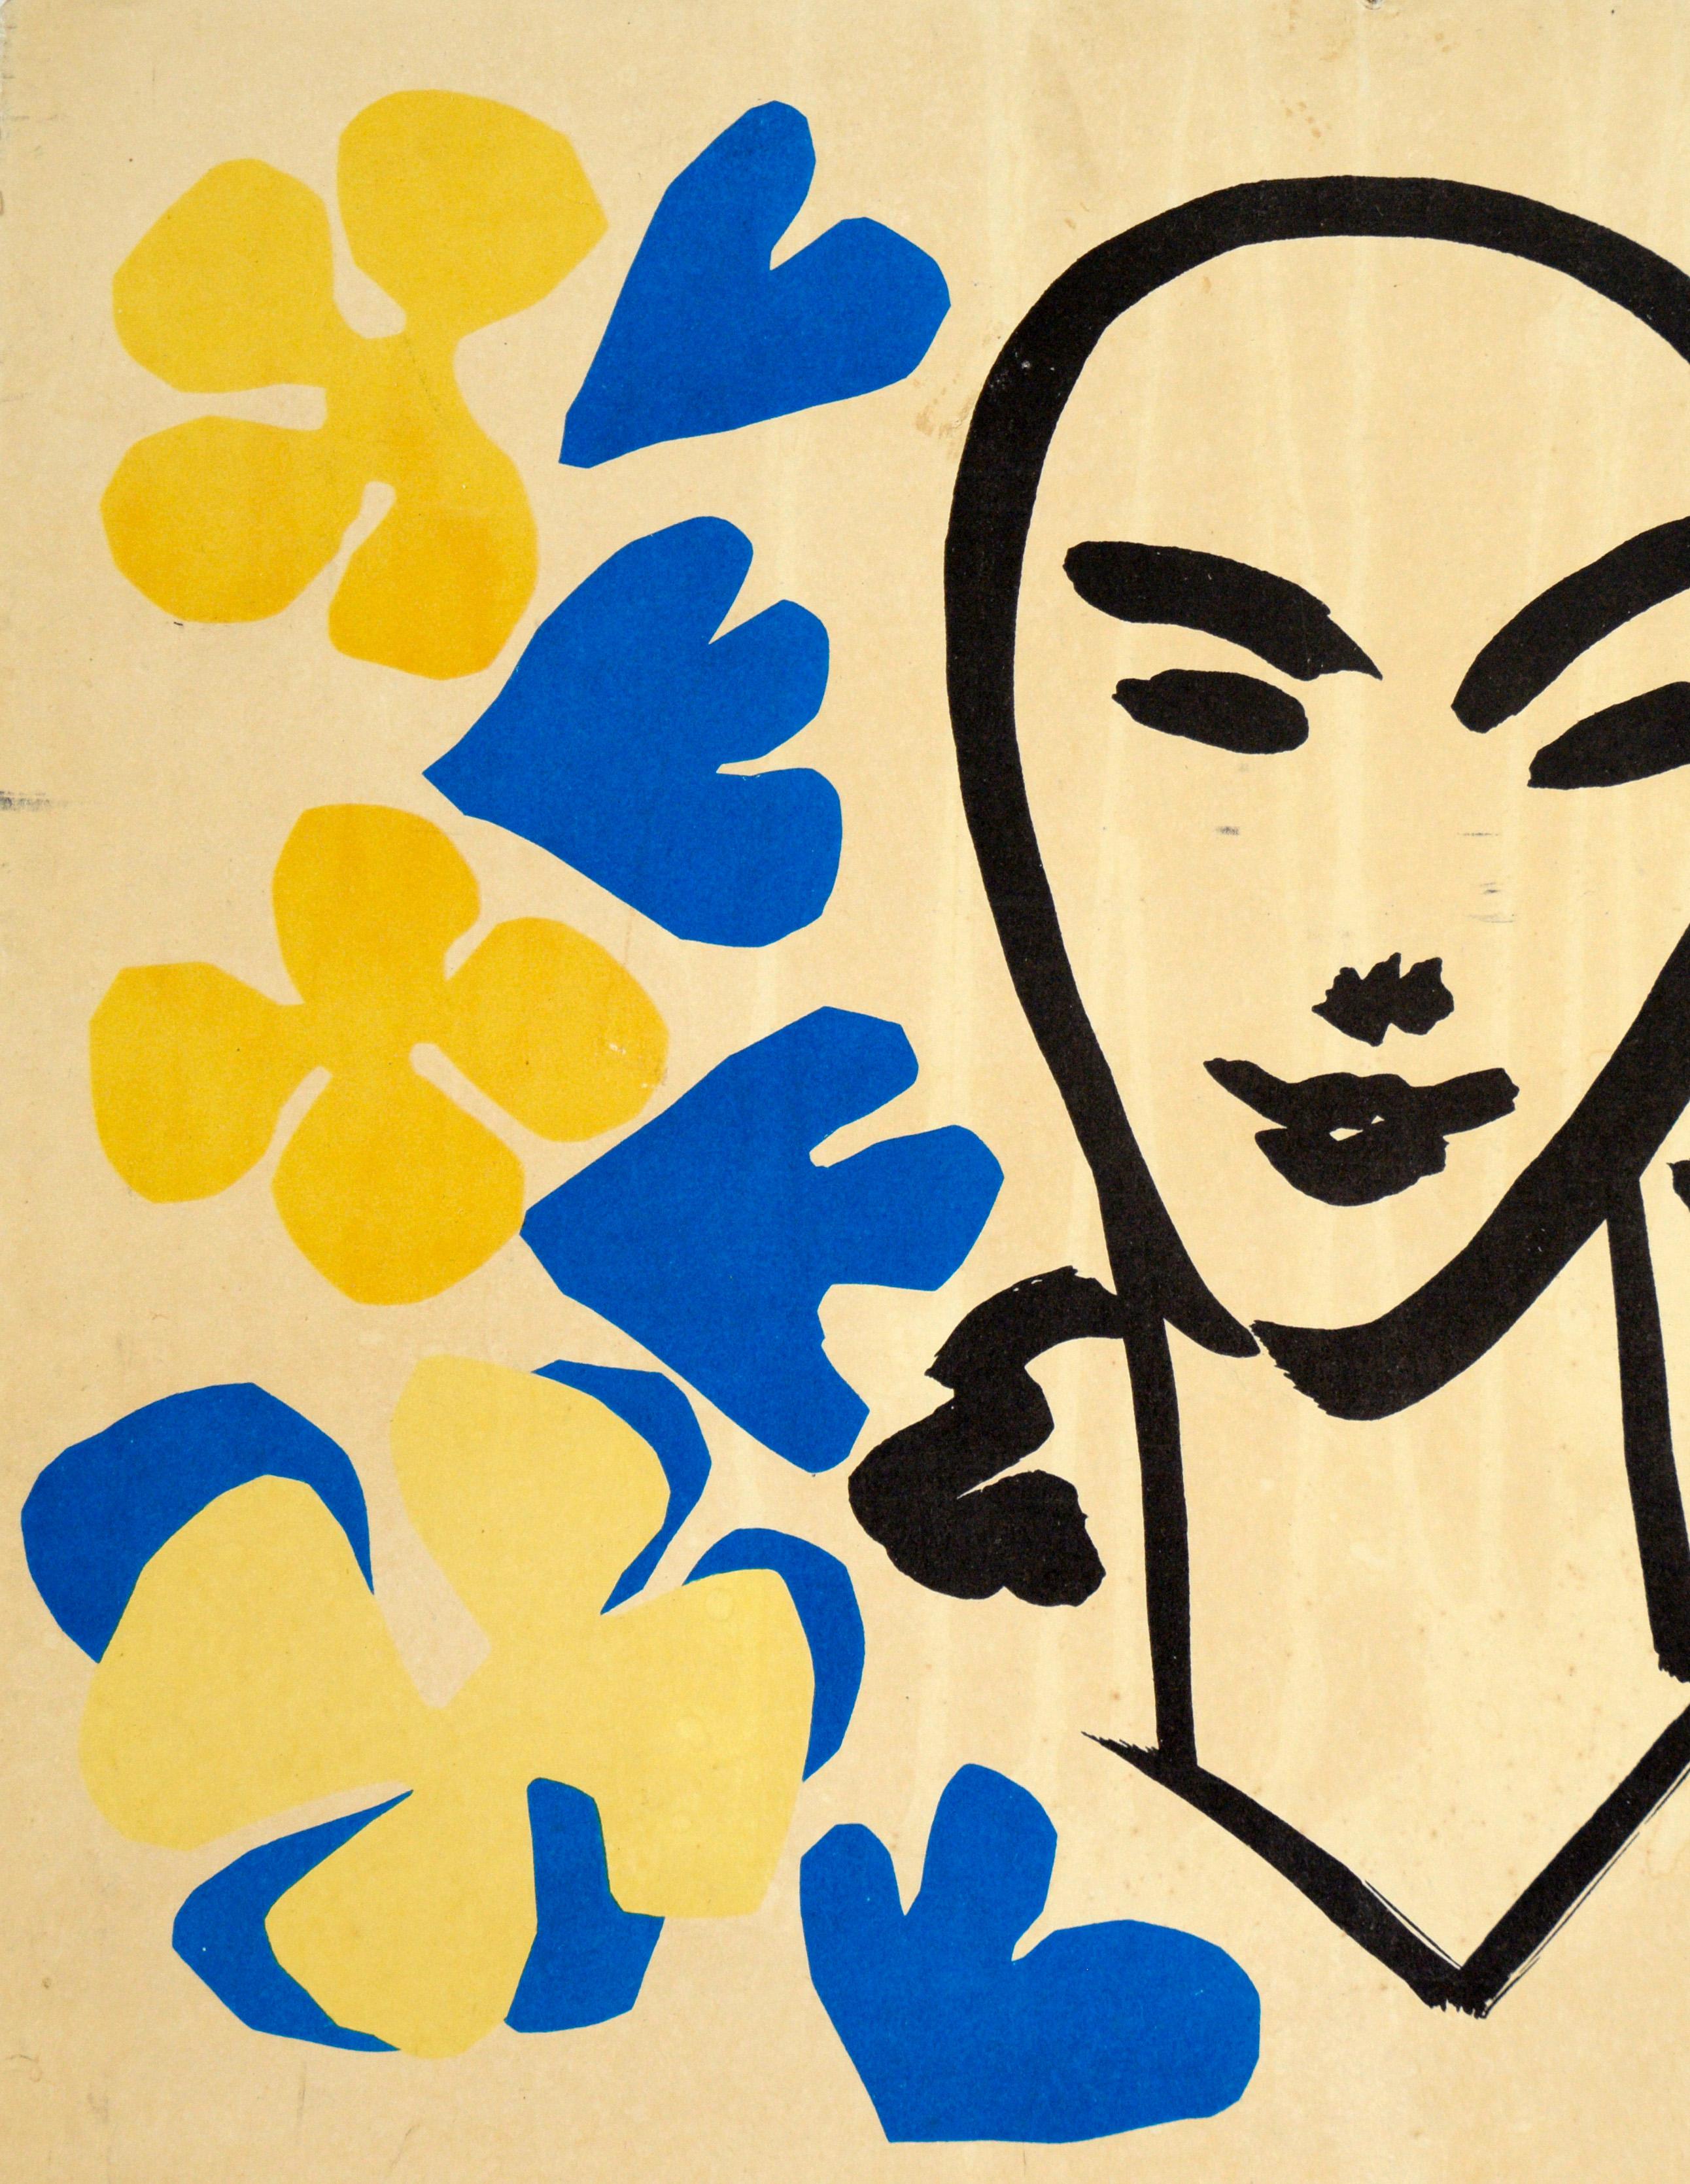 Original Vintage Henri Matisse Exhibition Poster, The Tate Gallery, 1953 - Print by (after) Henri Matisse